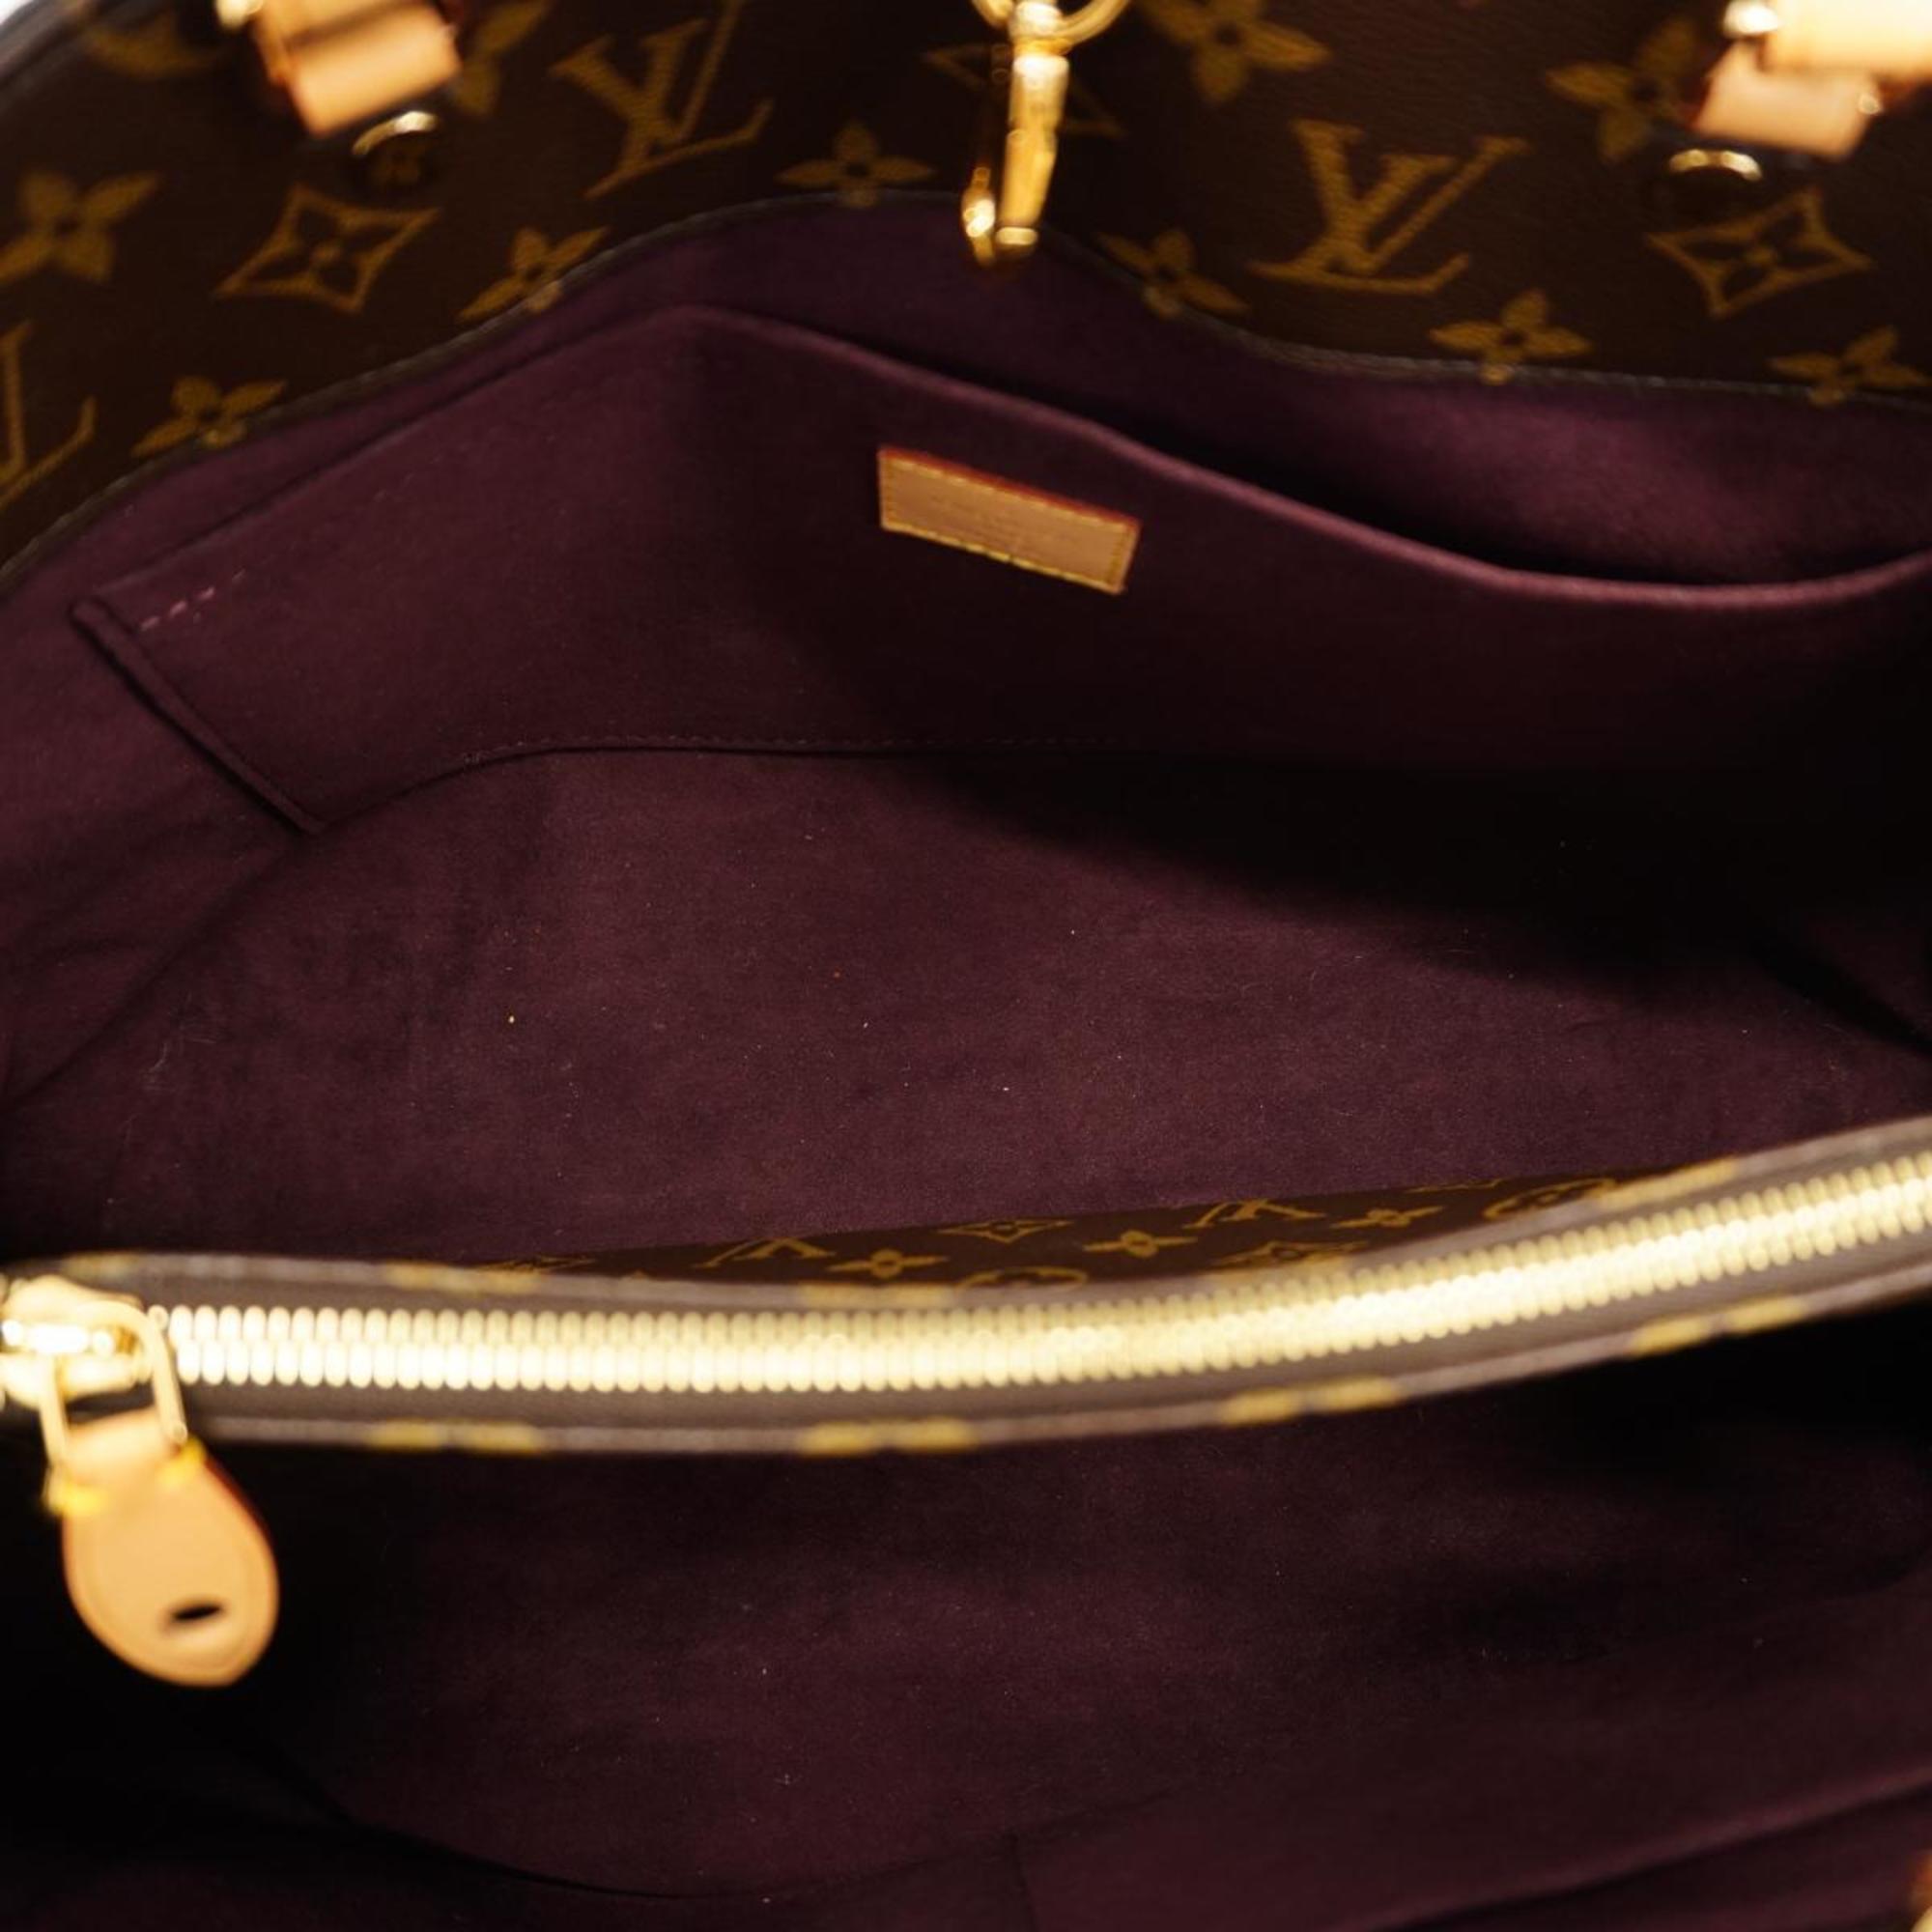 Louis Vuitton Handbag Monogram Montaigne GM M41067 Brown Ladies